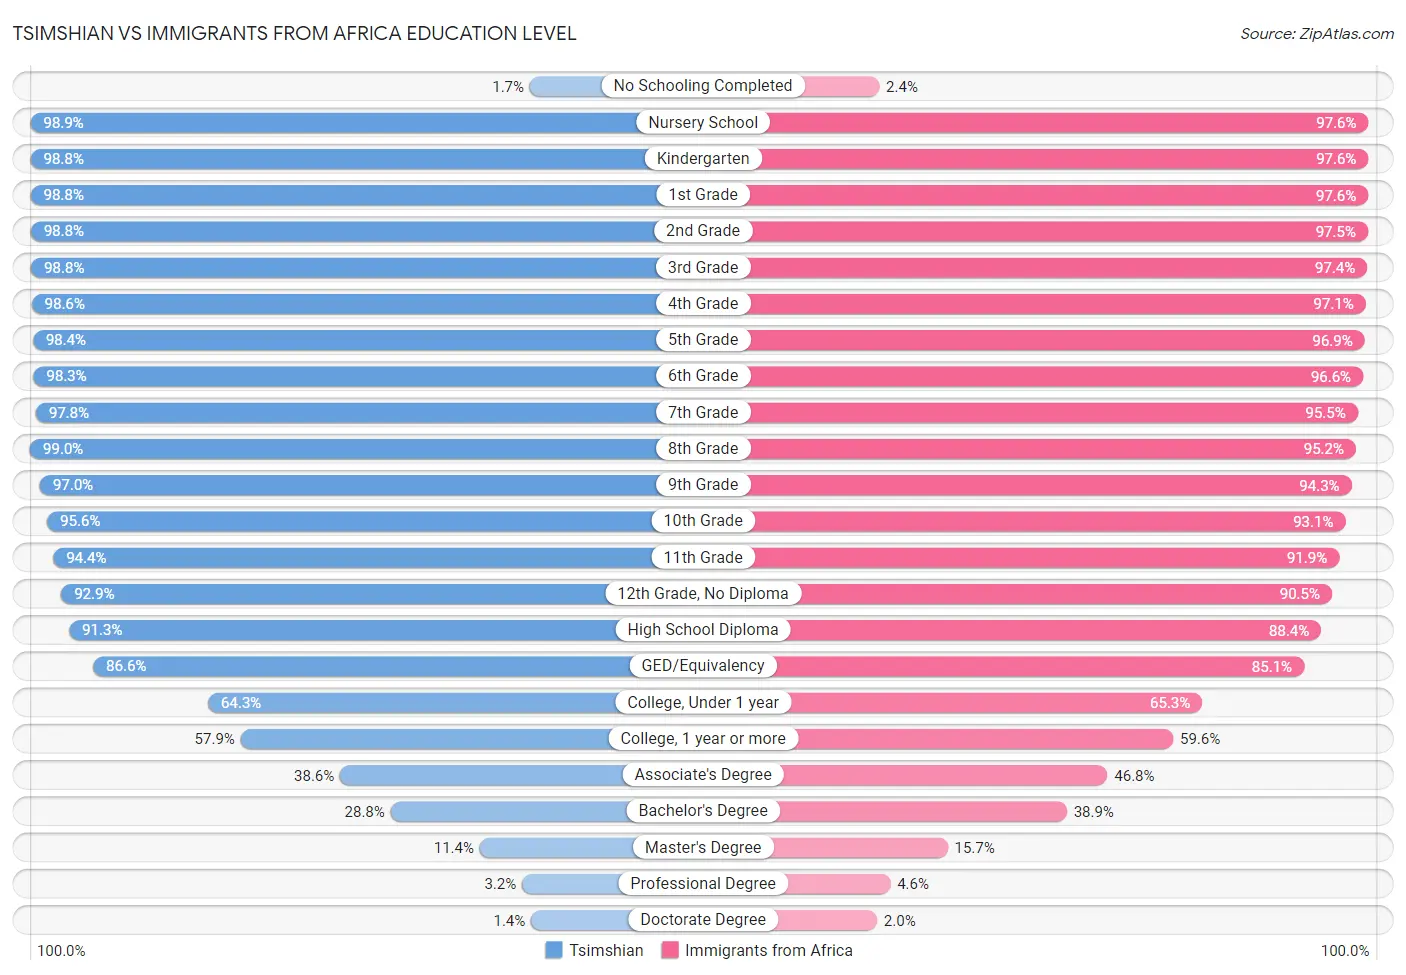 Tsimshian vs Immigrants from Africa Education Level